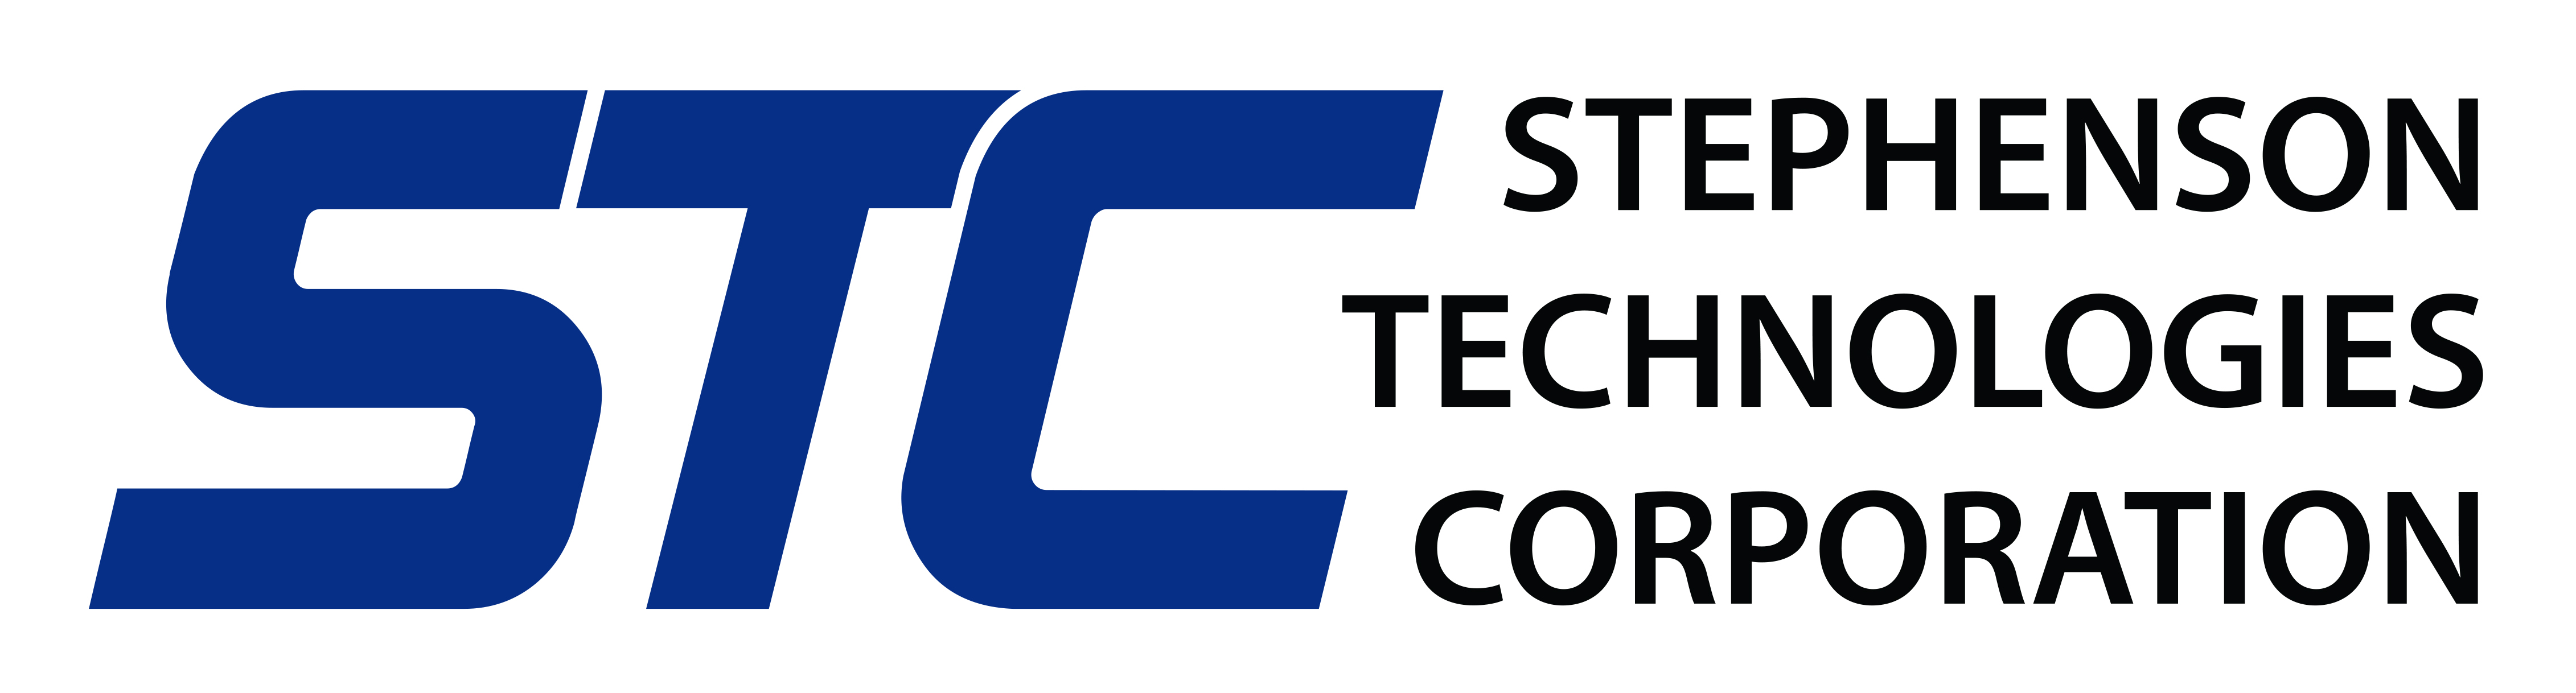 Stephenson Technologies Corporation